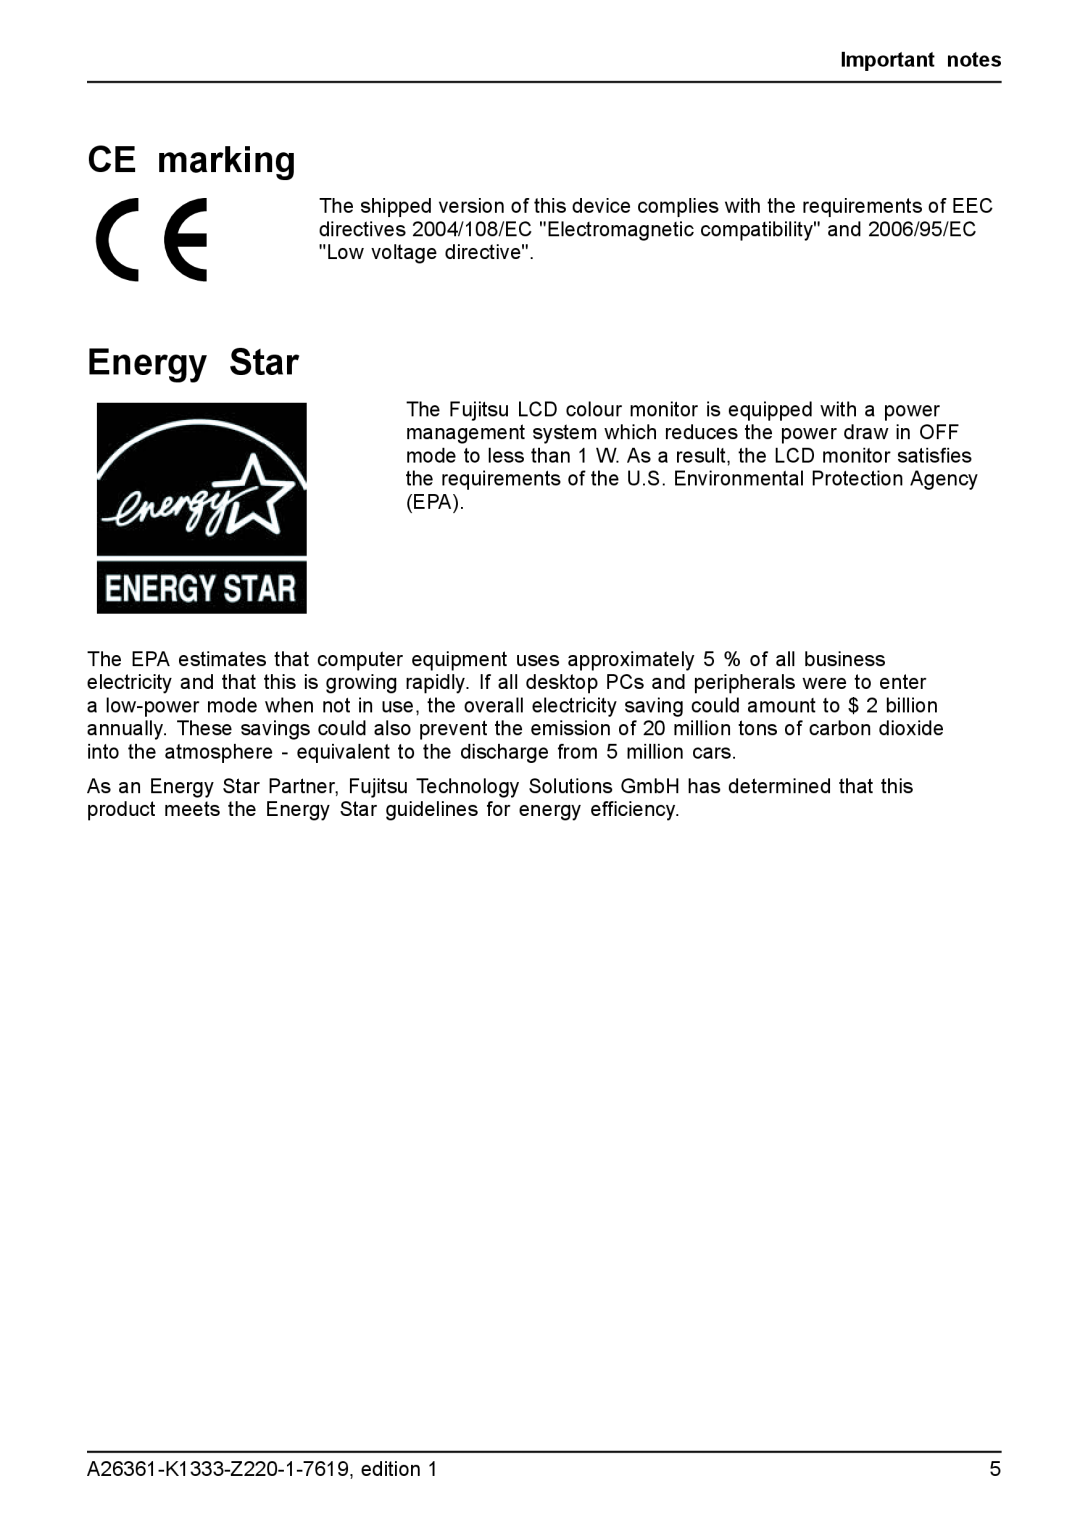 Fujitsu B19W-5 ECO manual CE marking, Energy Star, Important notes 